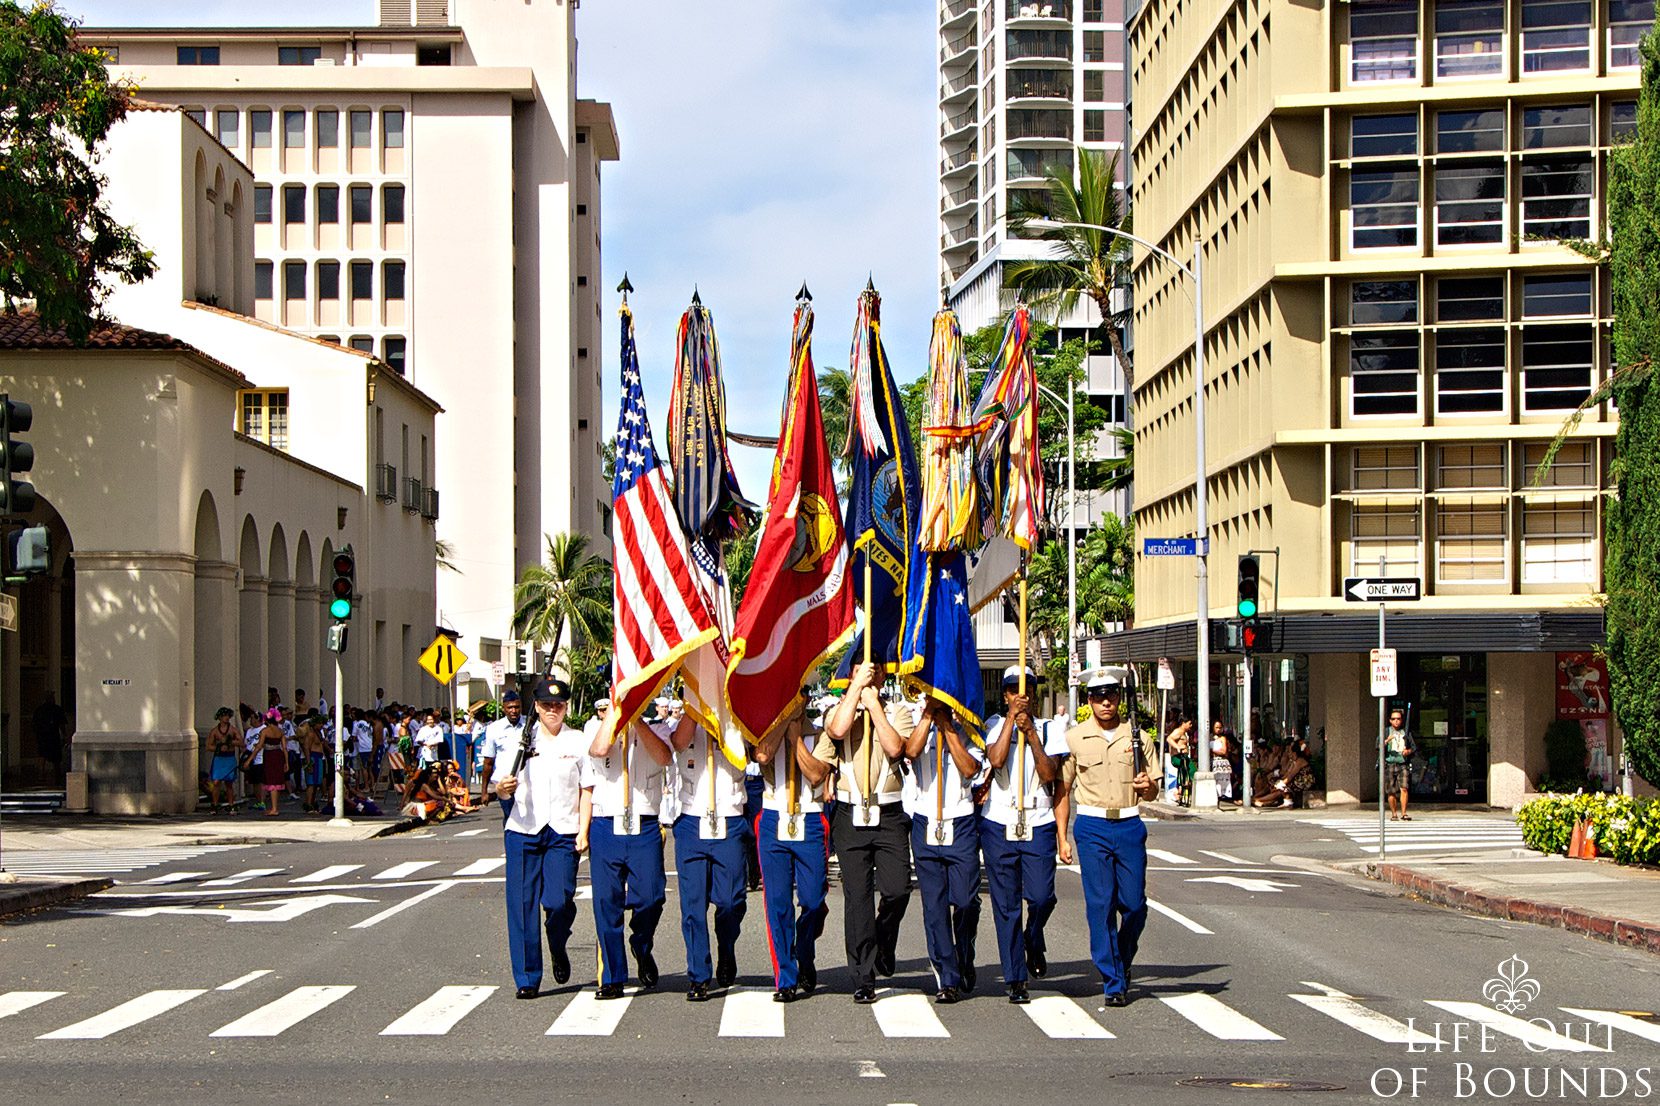 King-Kamehameha-Day-Parade-in-Honolulu-Hawaii